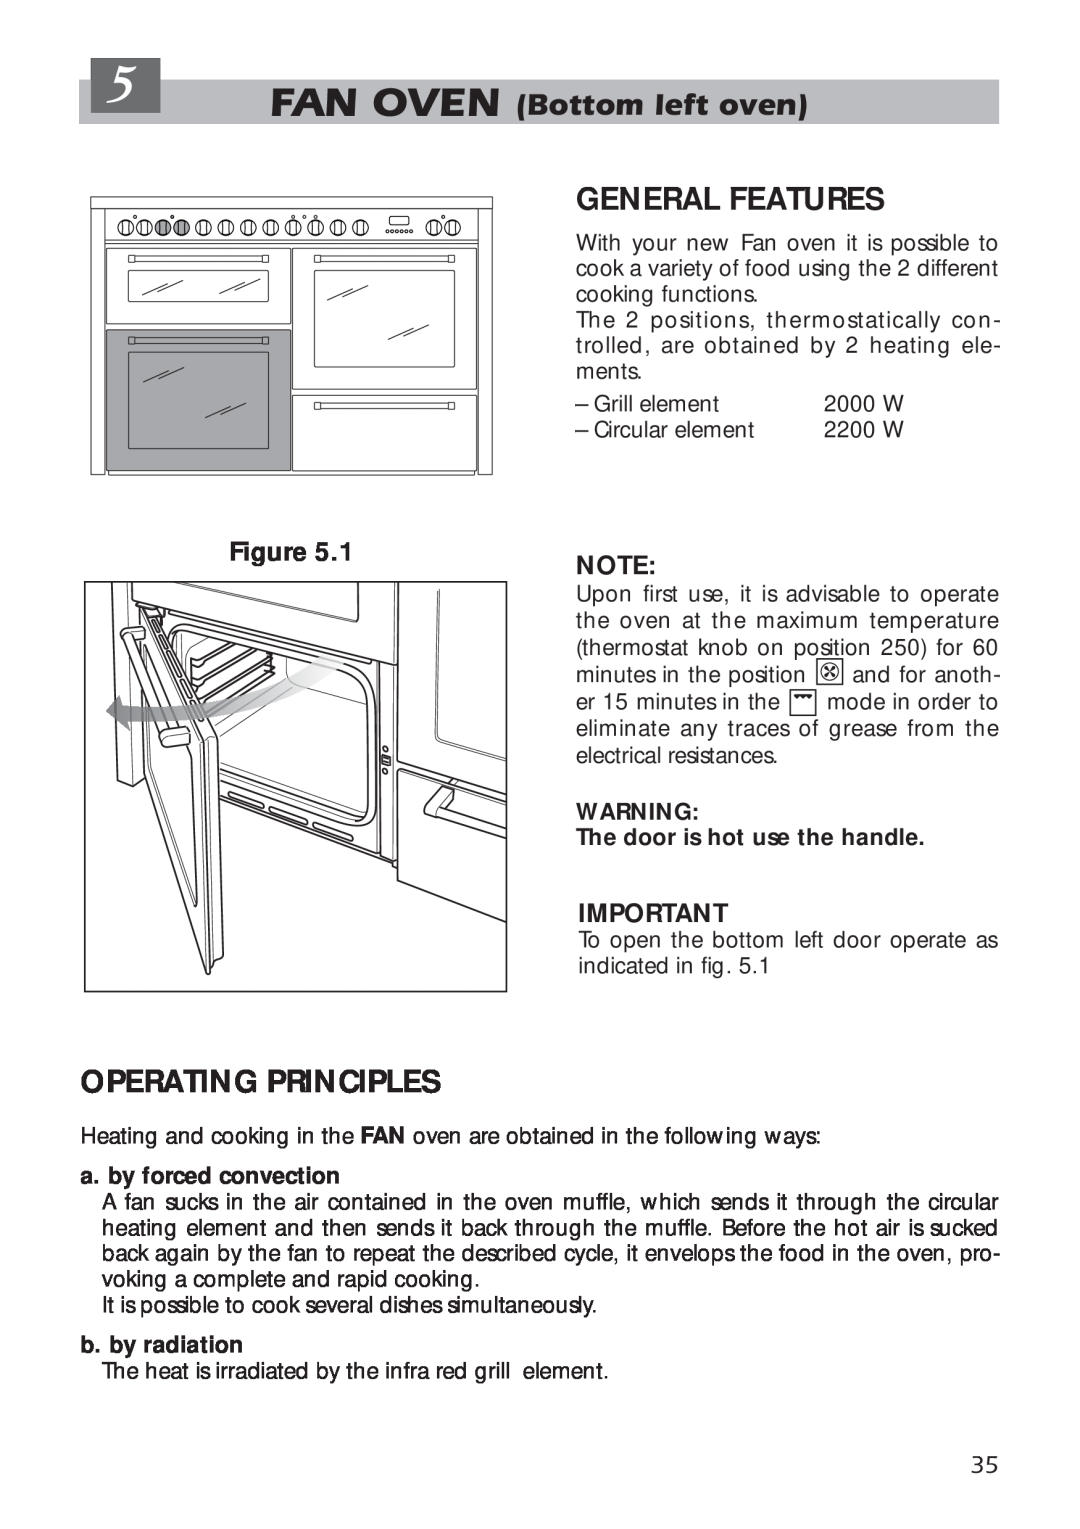 DeLonghi A 1346 G manual FAN OVEN Bottom left oven, General Features, Operating Principles, Figure 